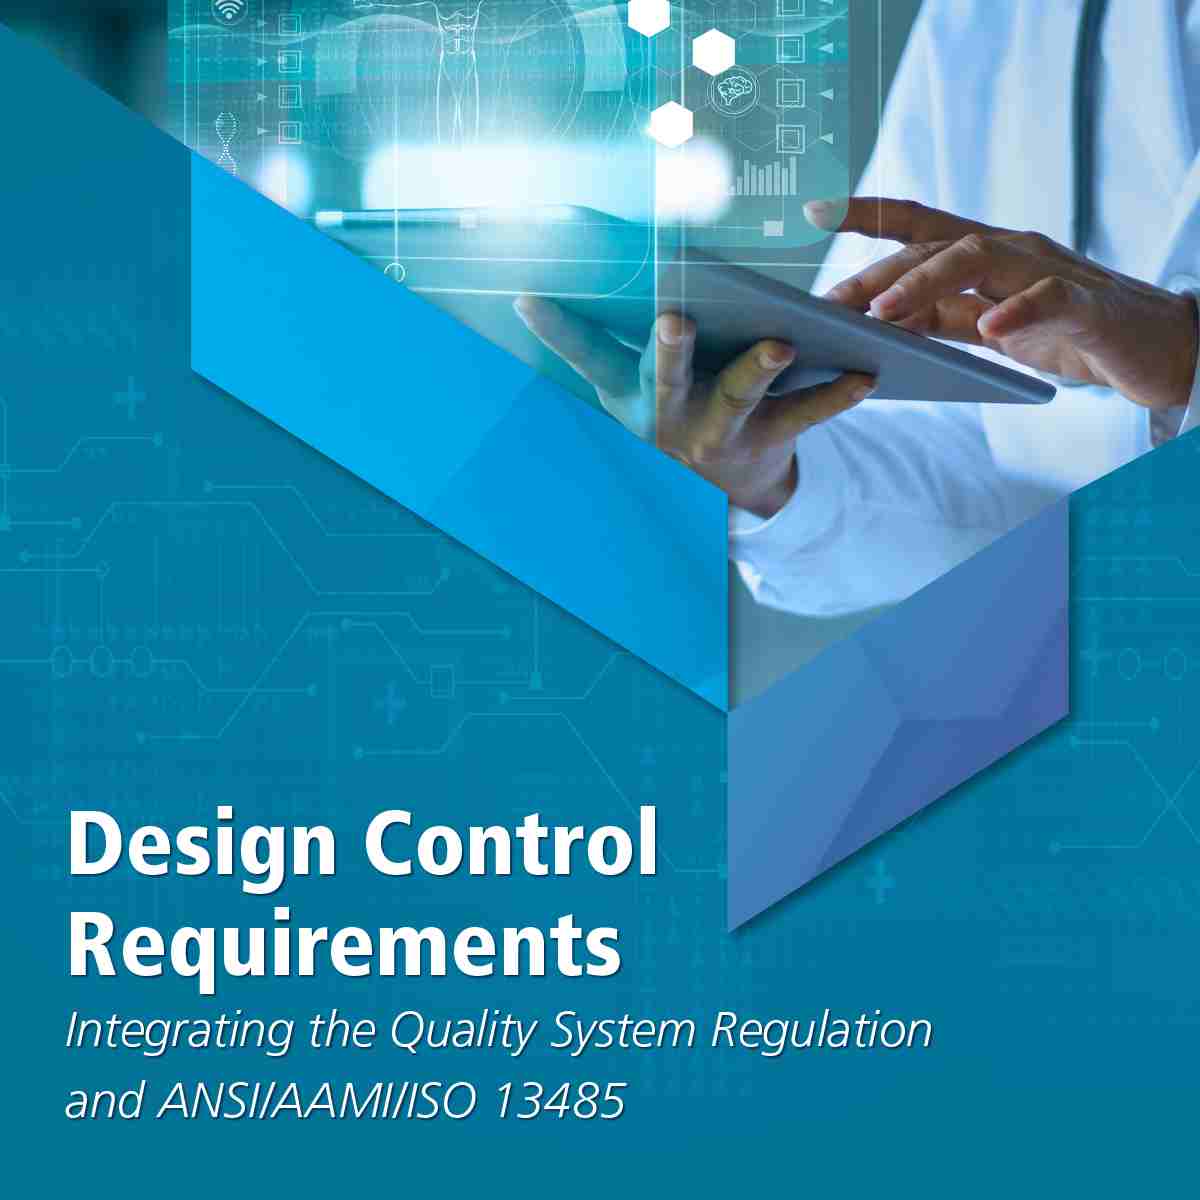 EUROPE: Design Control Requirements - Integrating the QSR